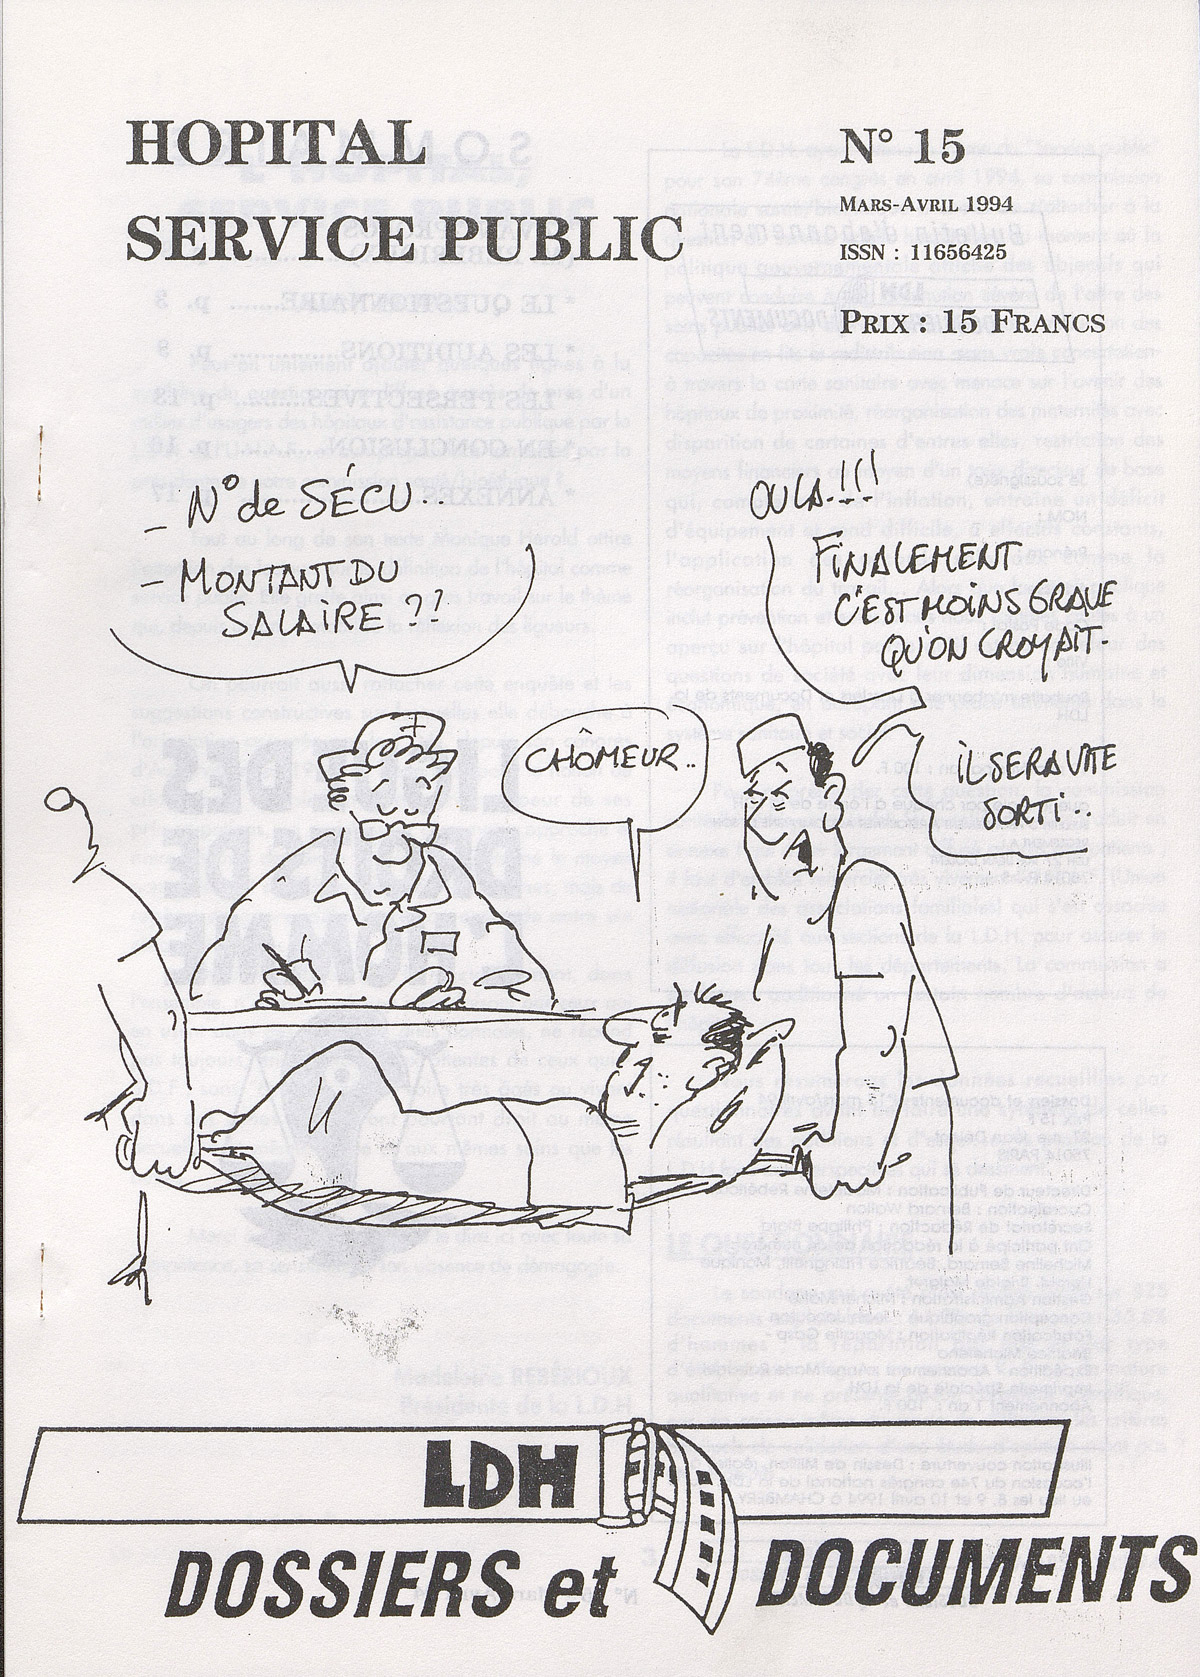 Hôpital et service public in LDH : dossiers et documents, n°15, mars-avril 1994